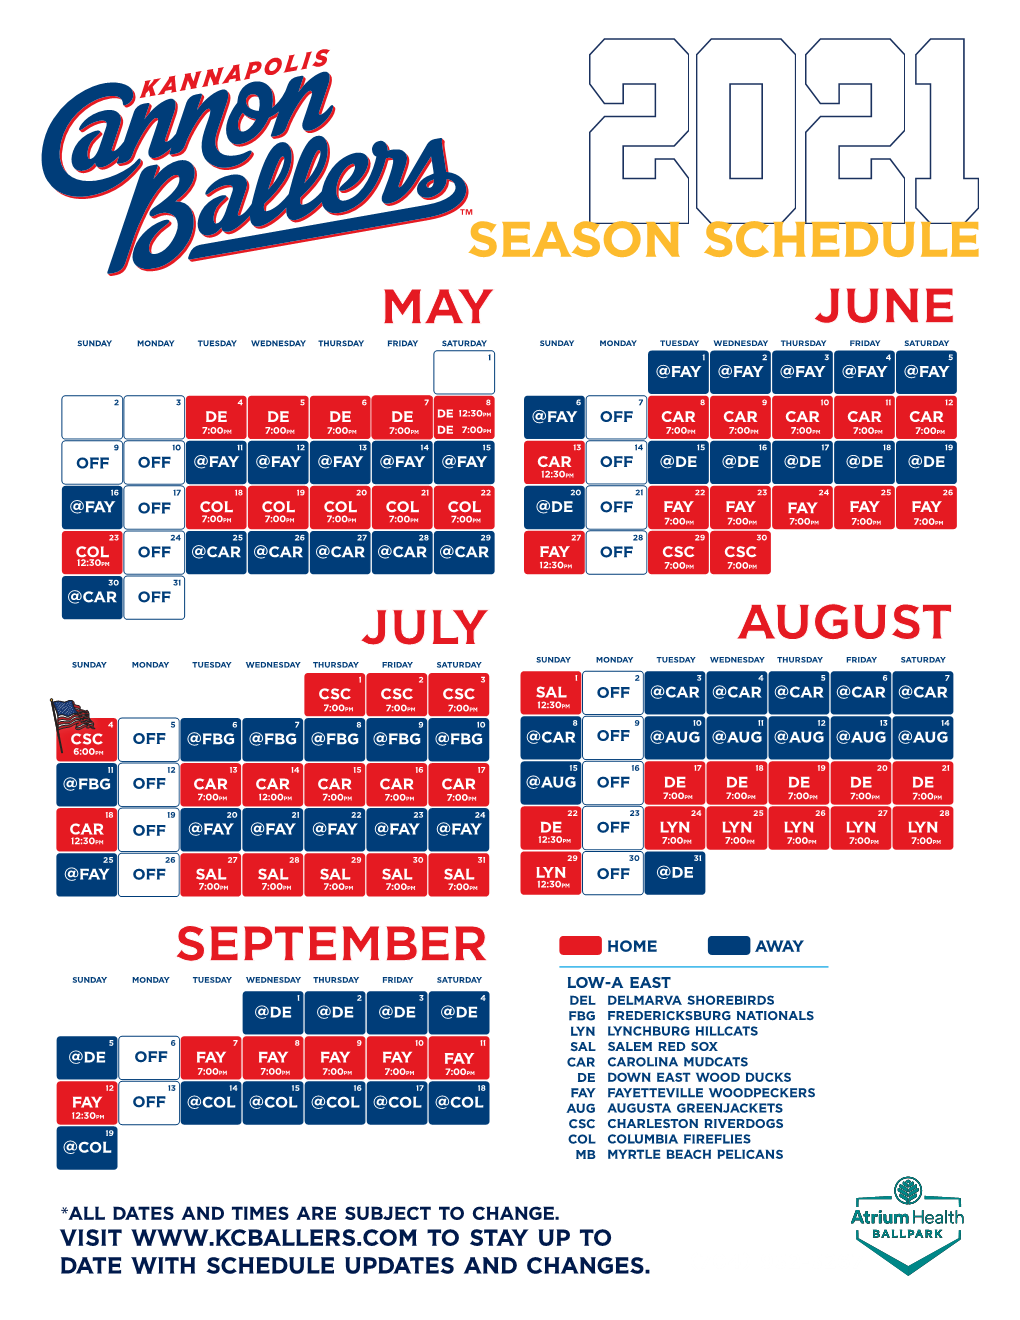 Season Schedule